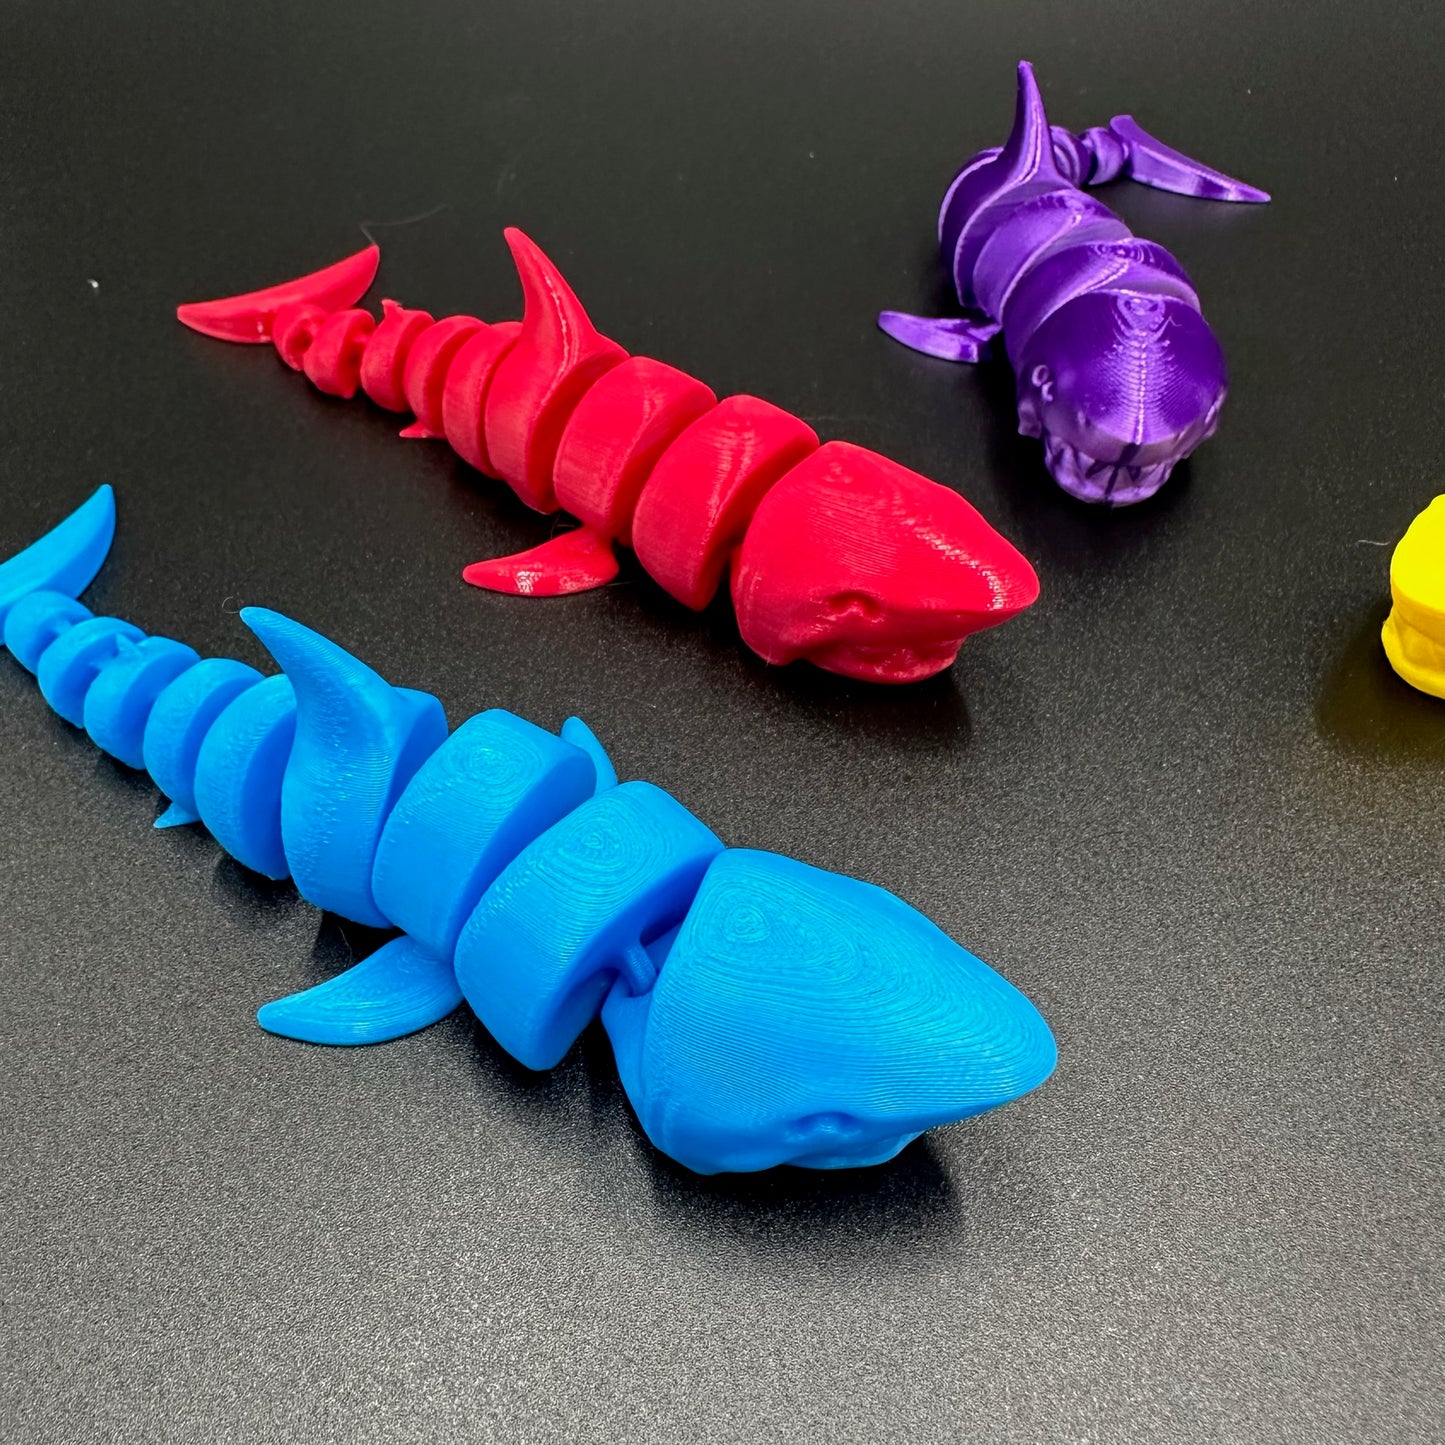 3D Printed Articulating Shark